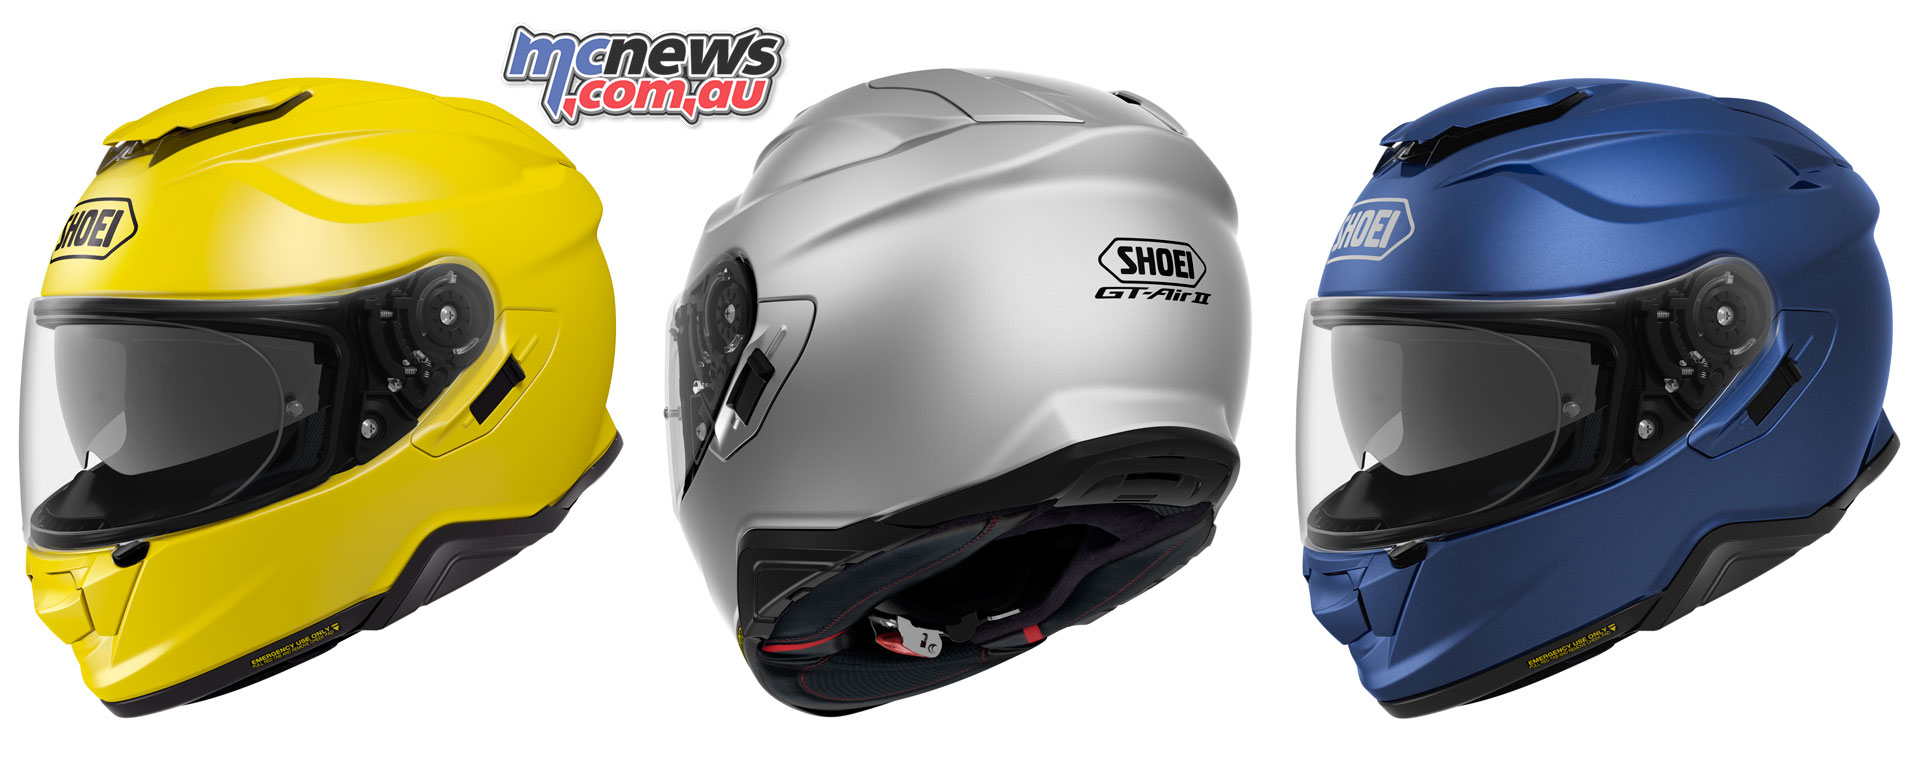 Shoei announce new GT-Air II Helmet | Sena SRL2 ready | MCNews.com.au